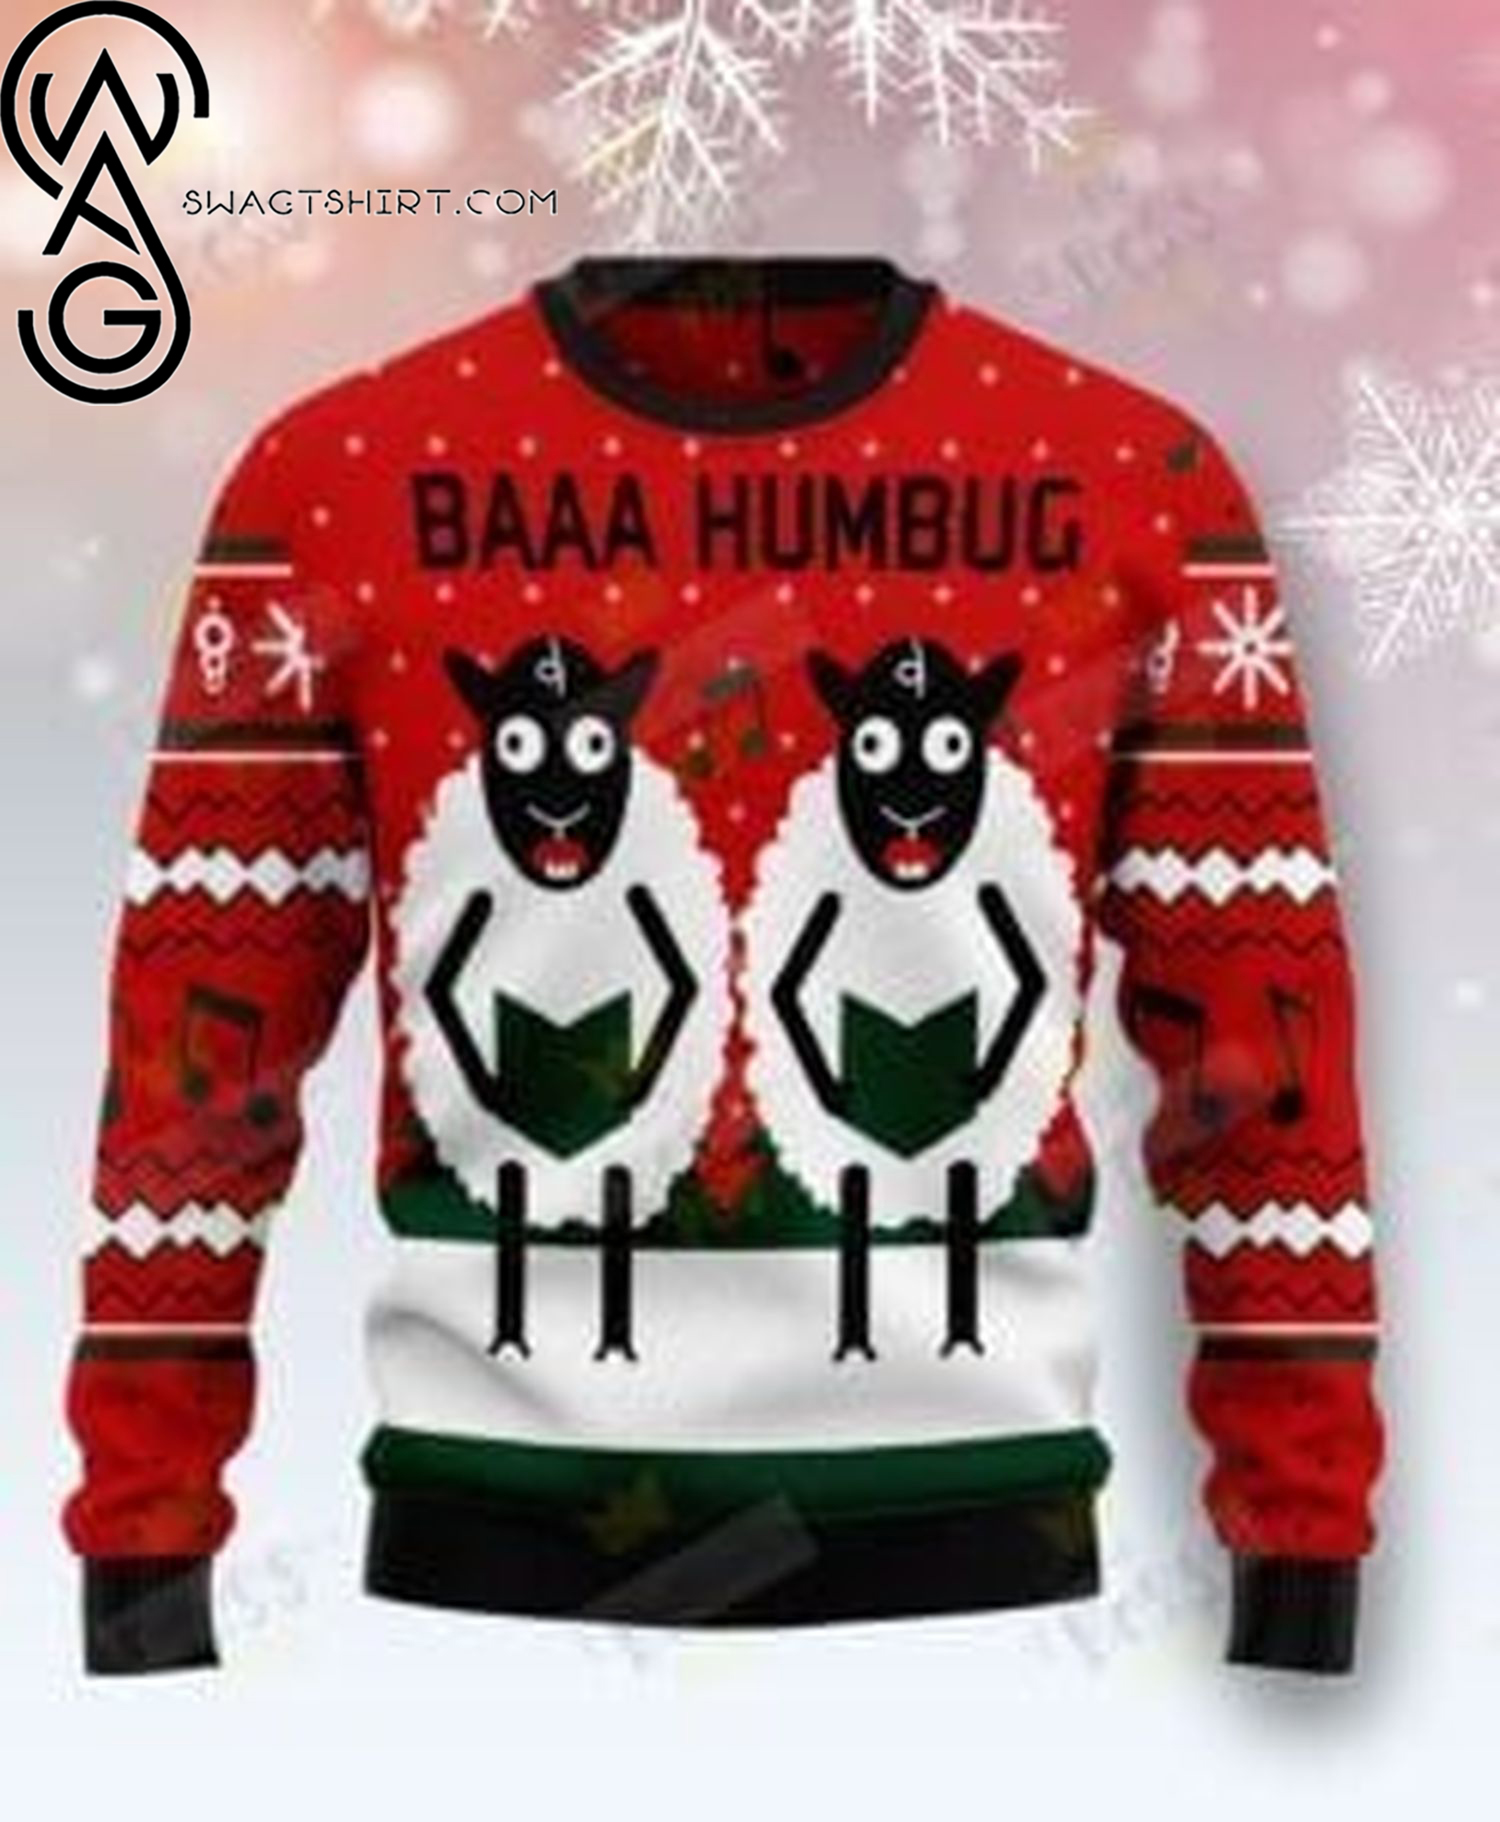 Sheep baaa humbug full printing ugly christmas sweater